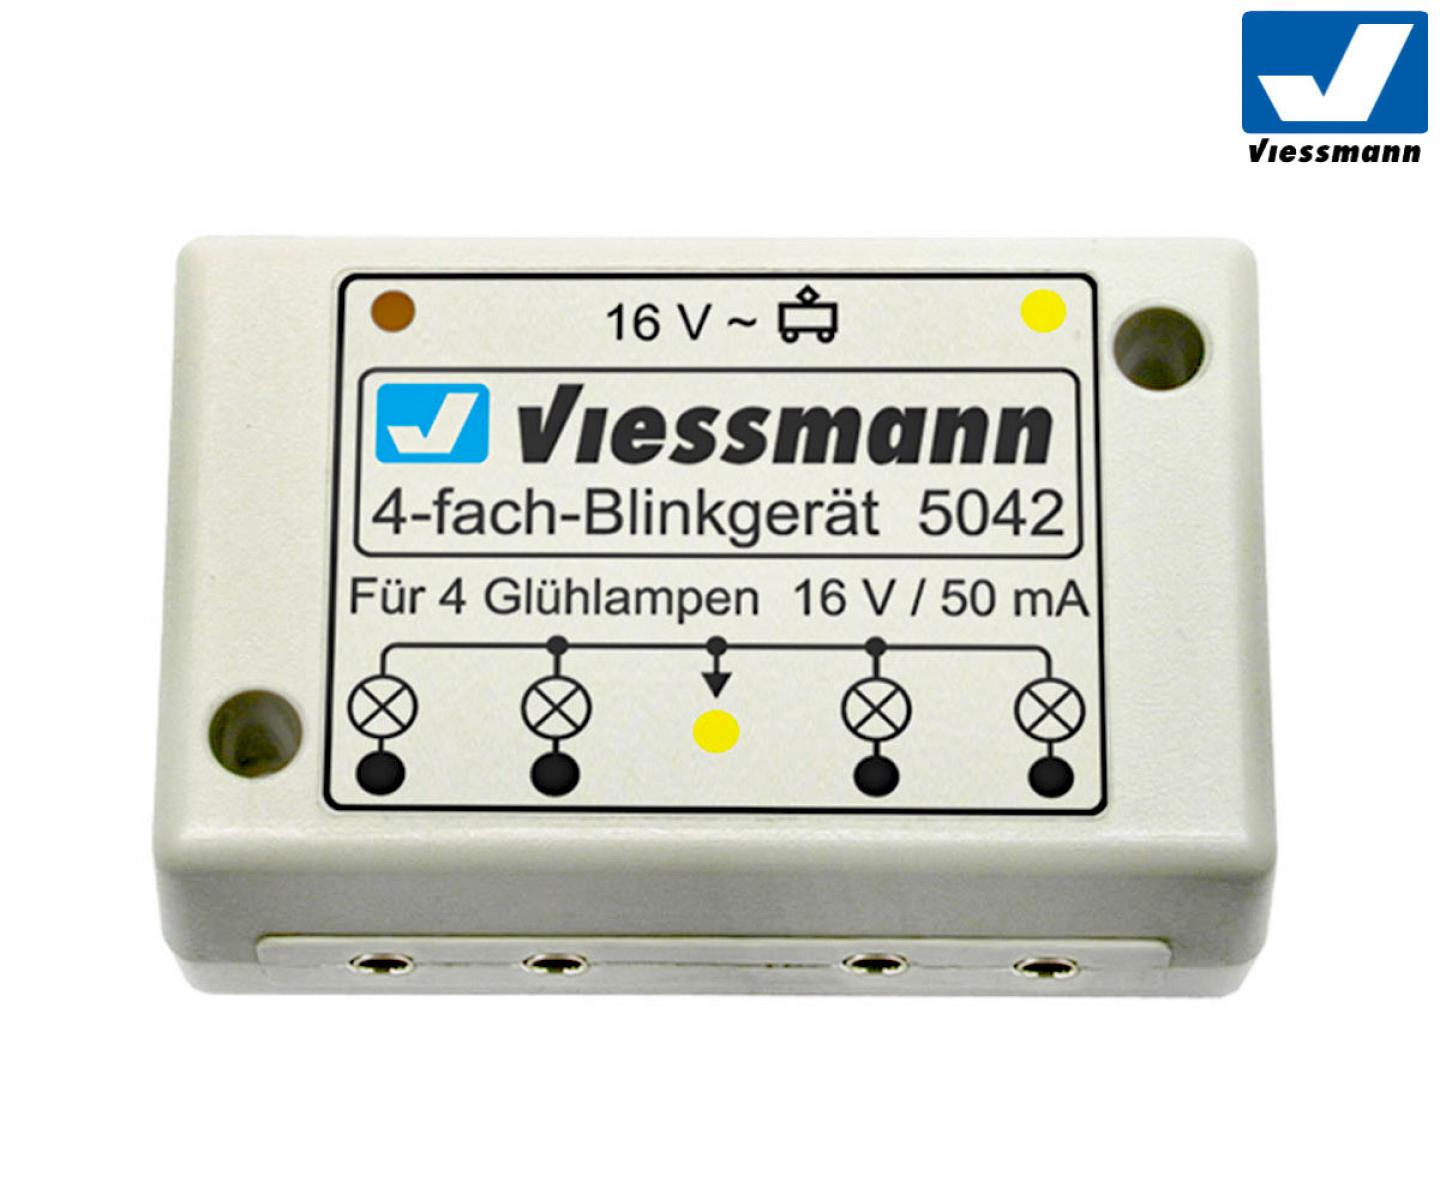 Viessmann 5042 N Vierfach-Blinkgeraet